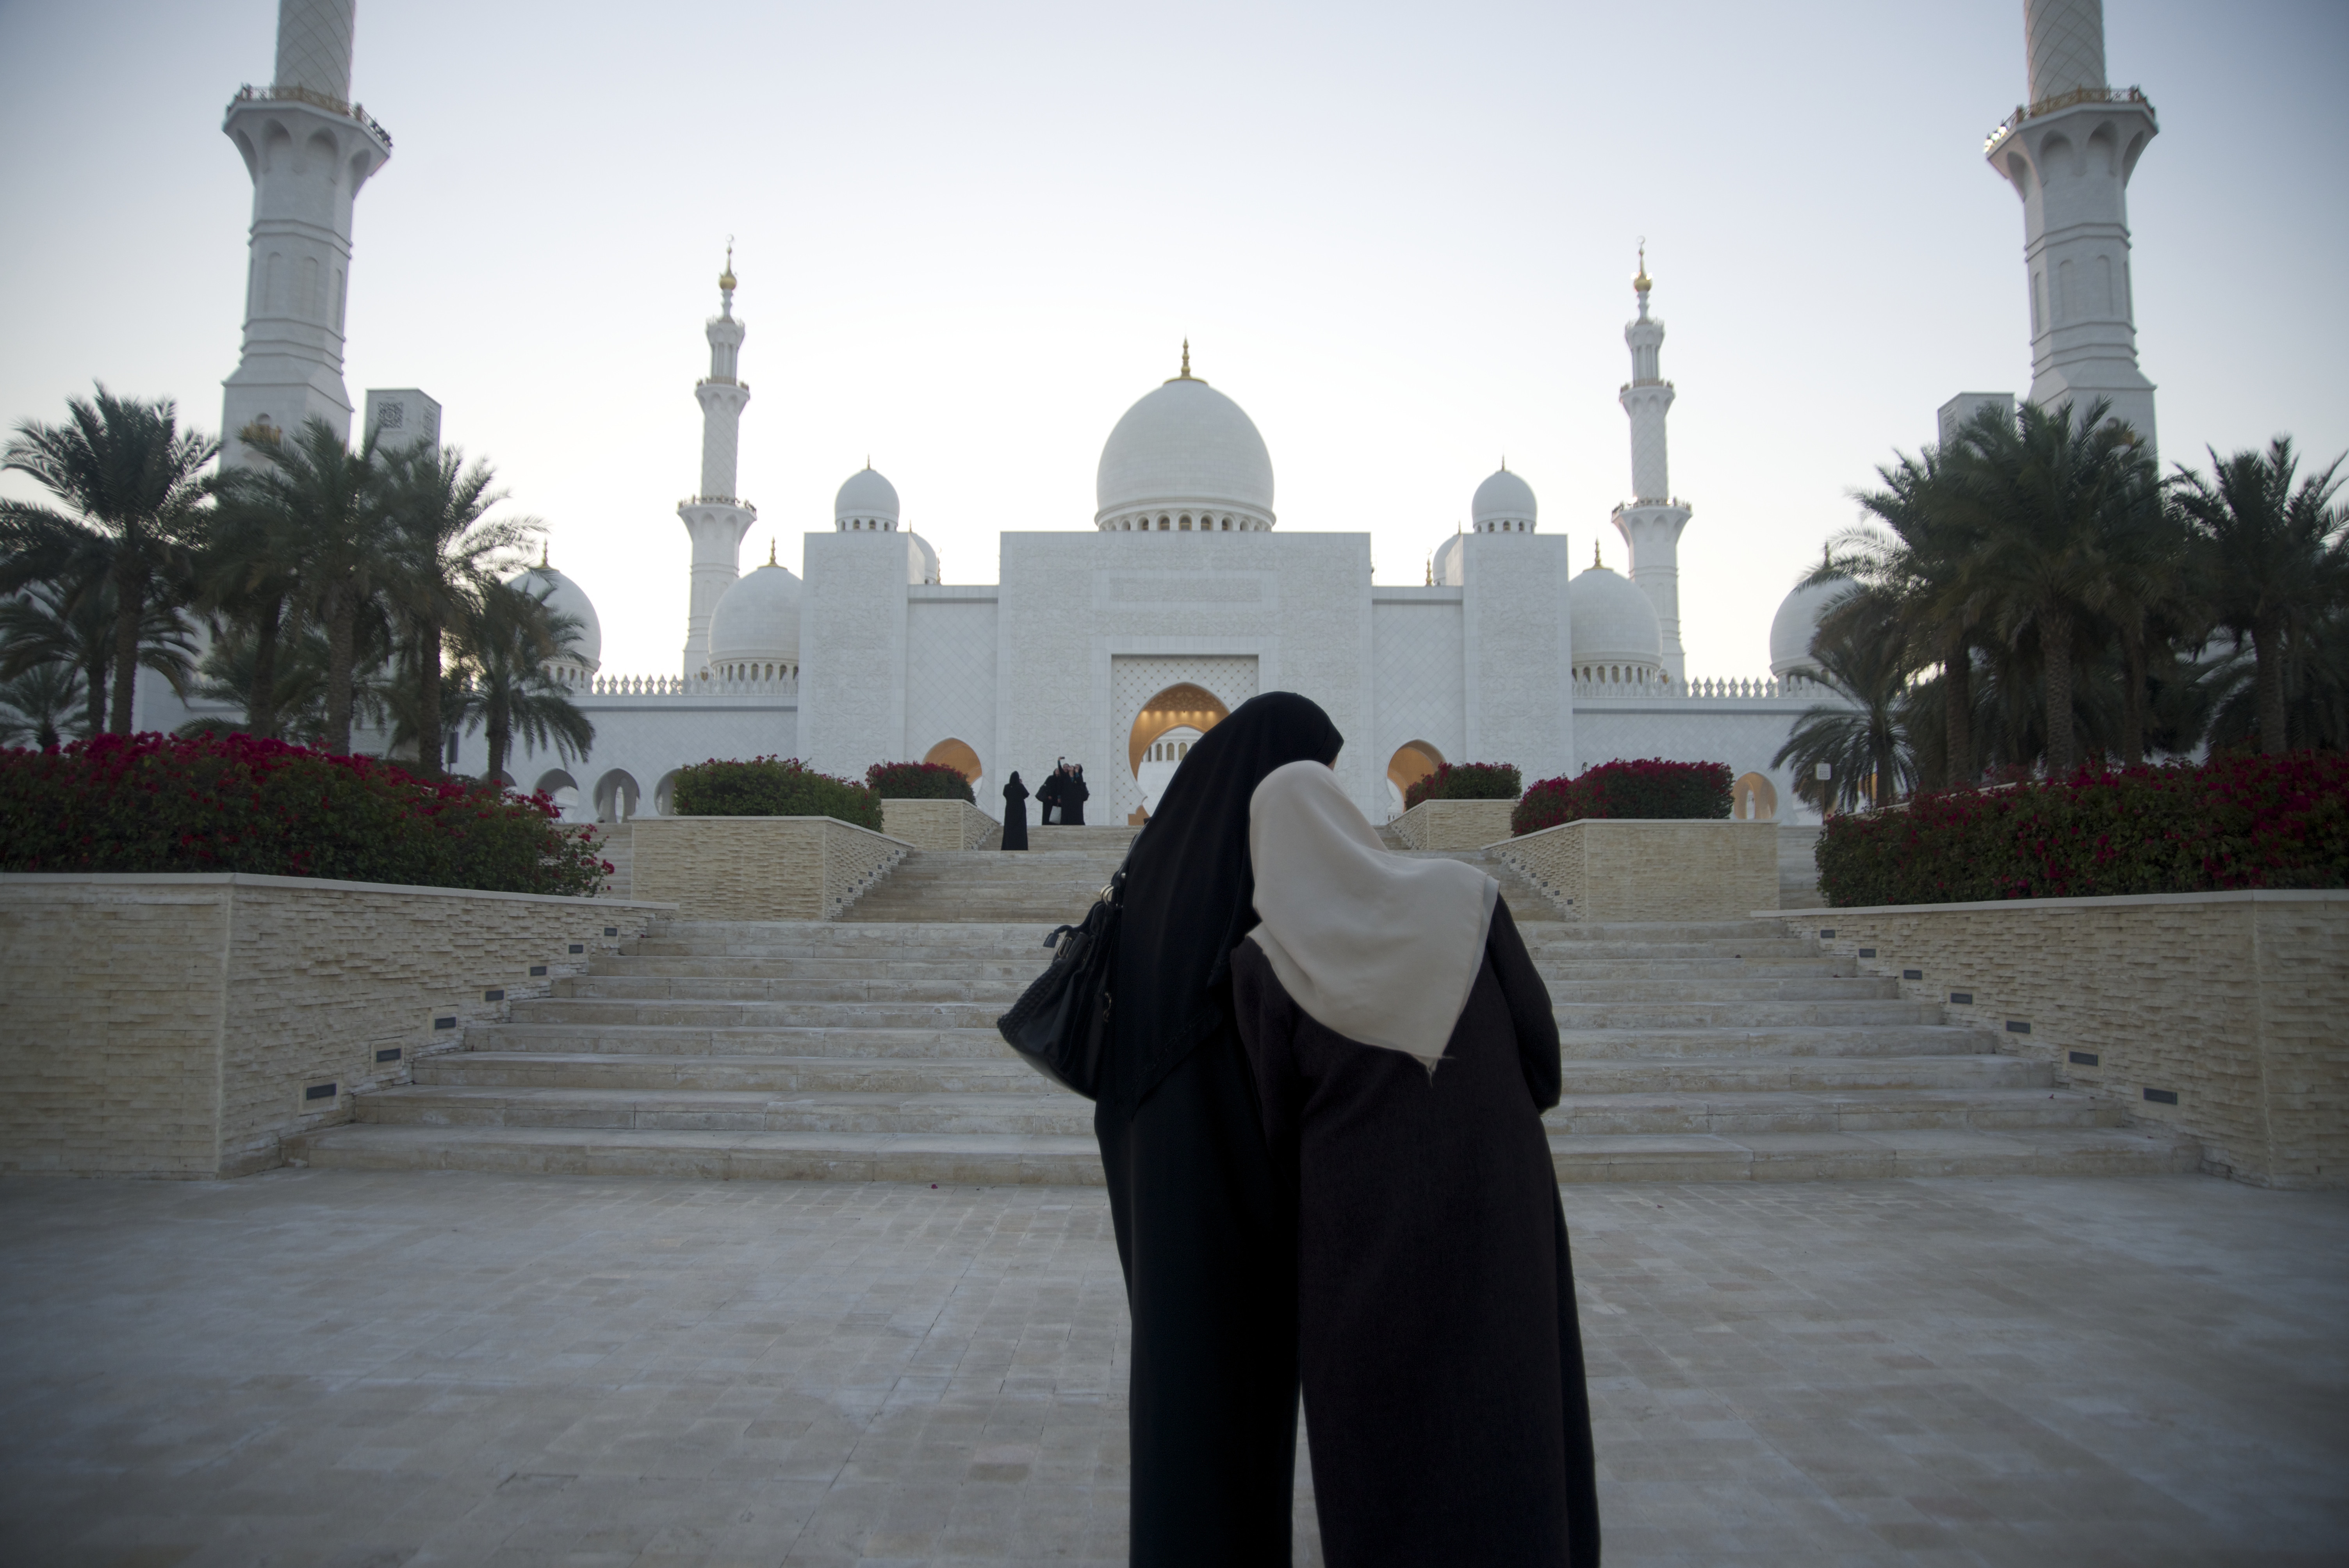 Sheikh Zayed, "a" mesquita